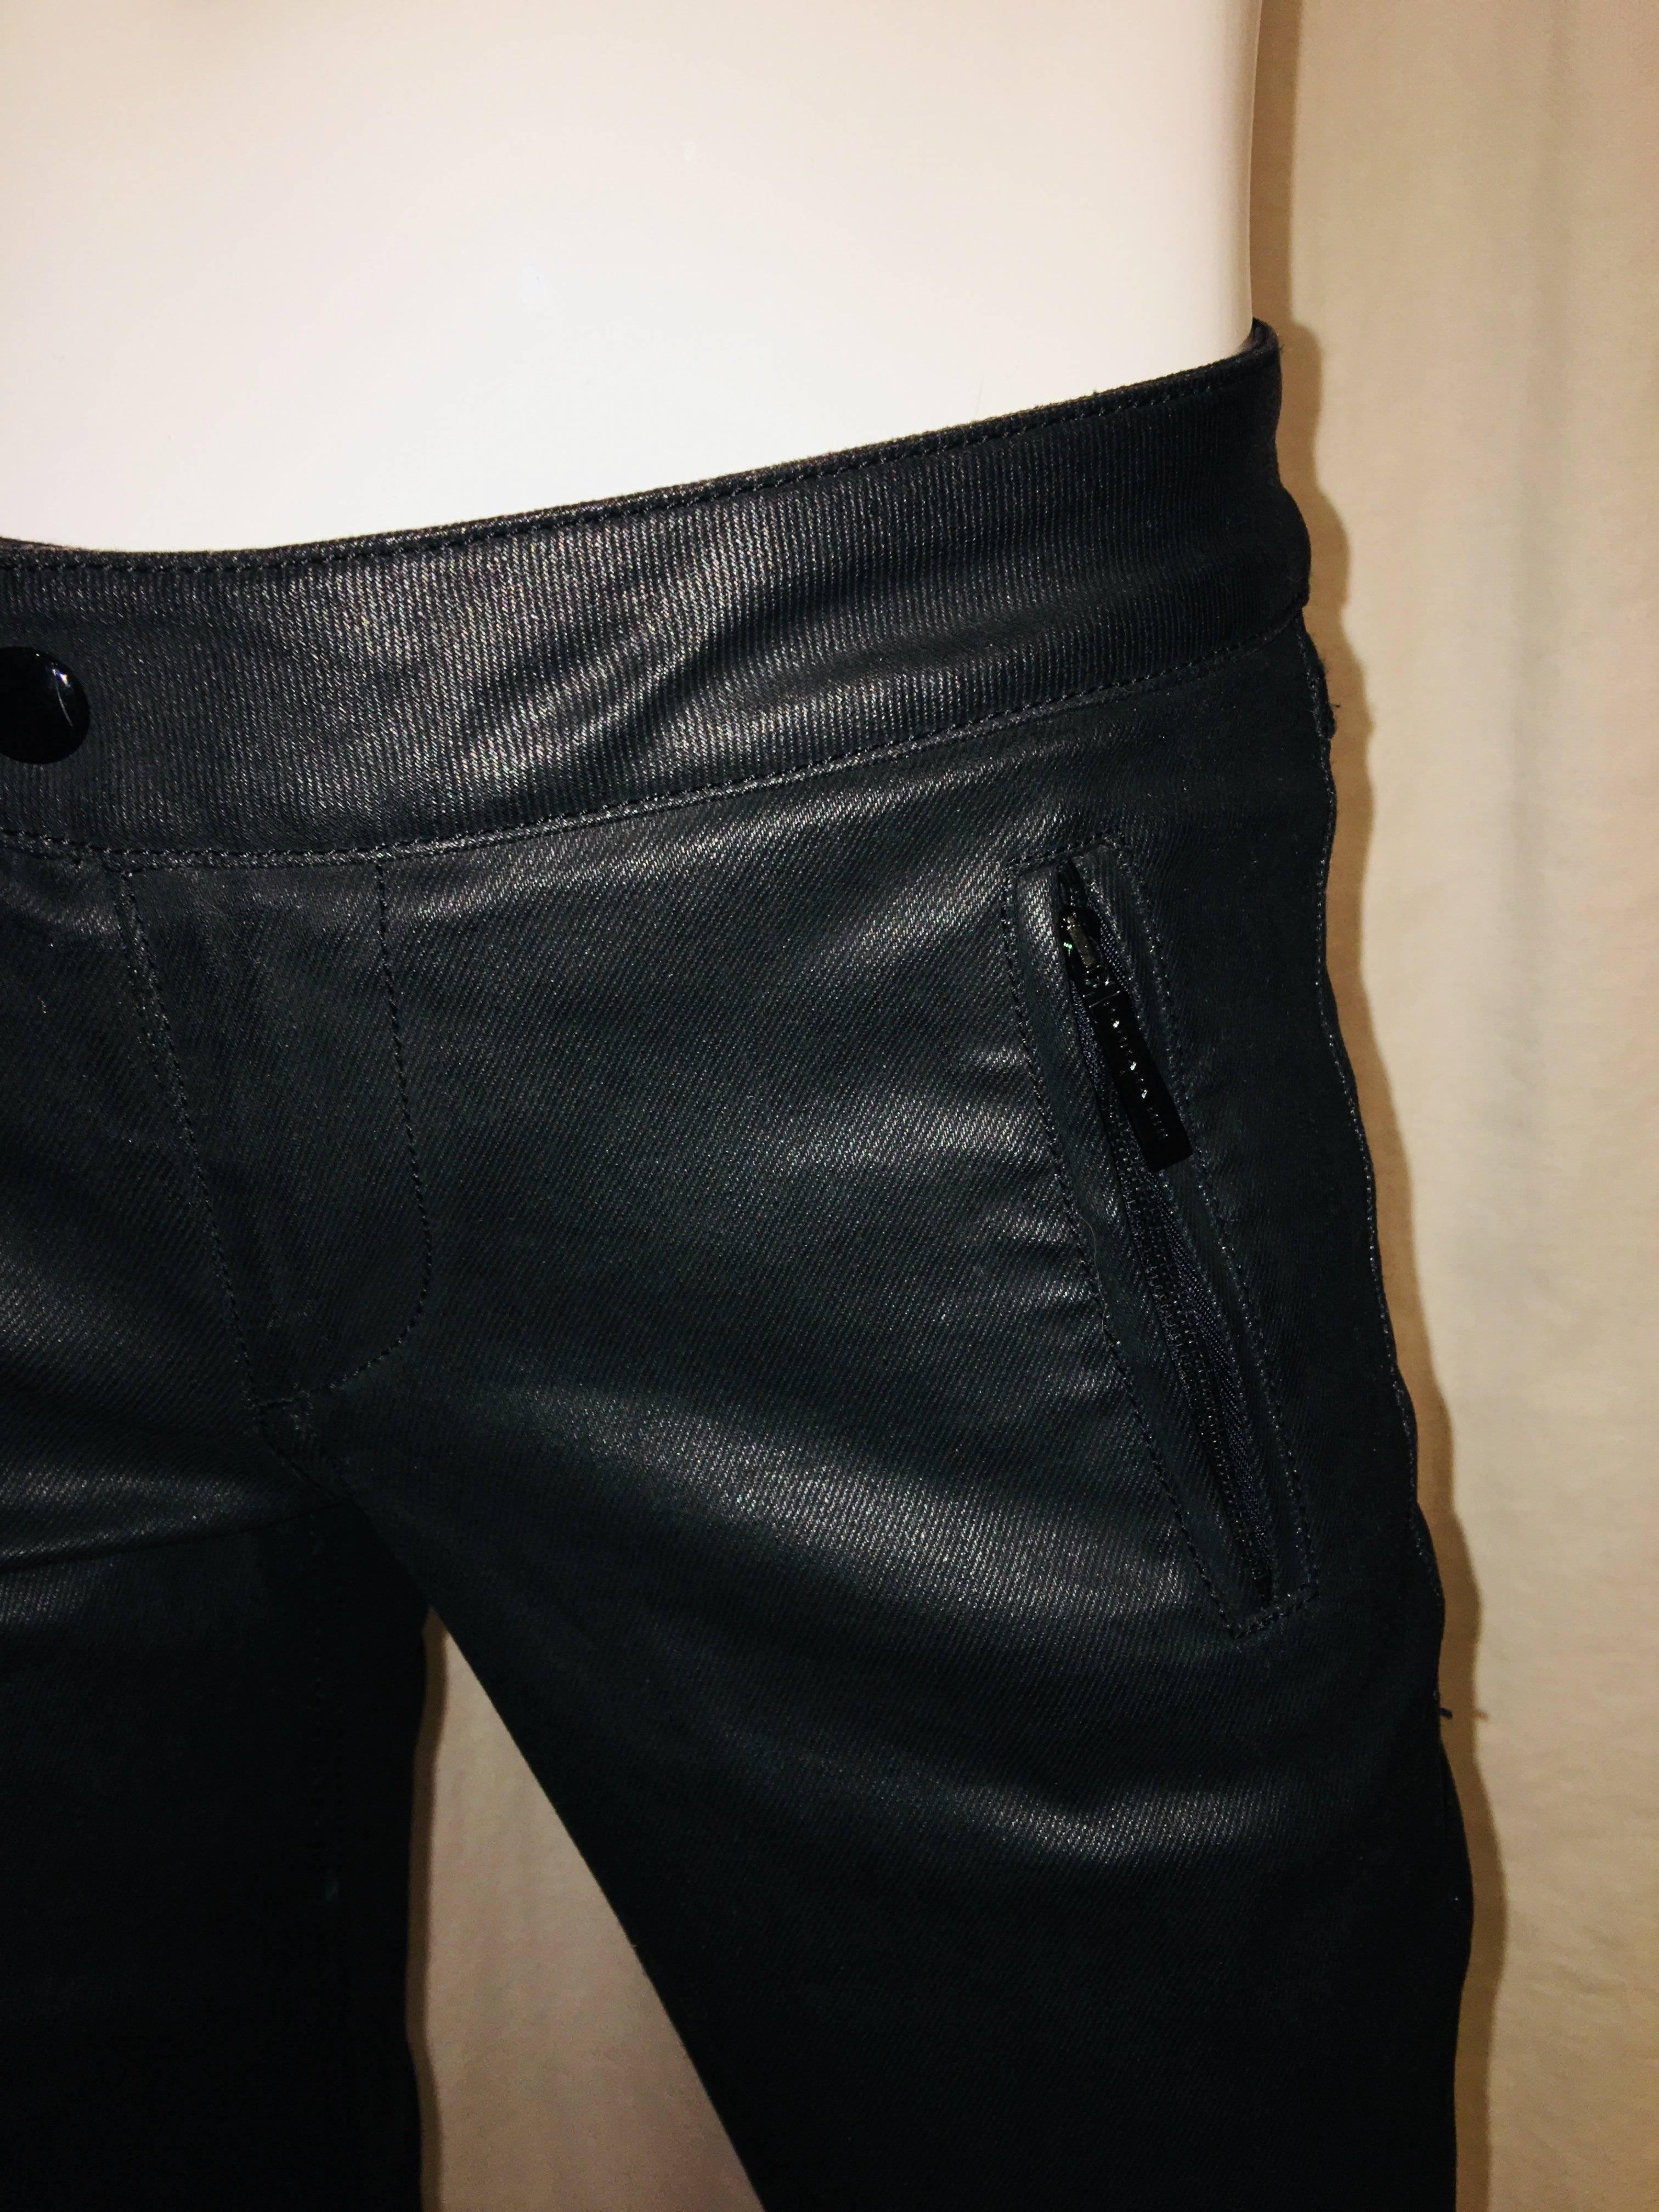 Black Barbara Bui Leather Pants